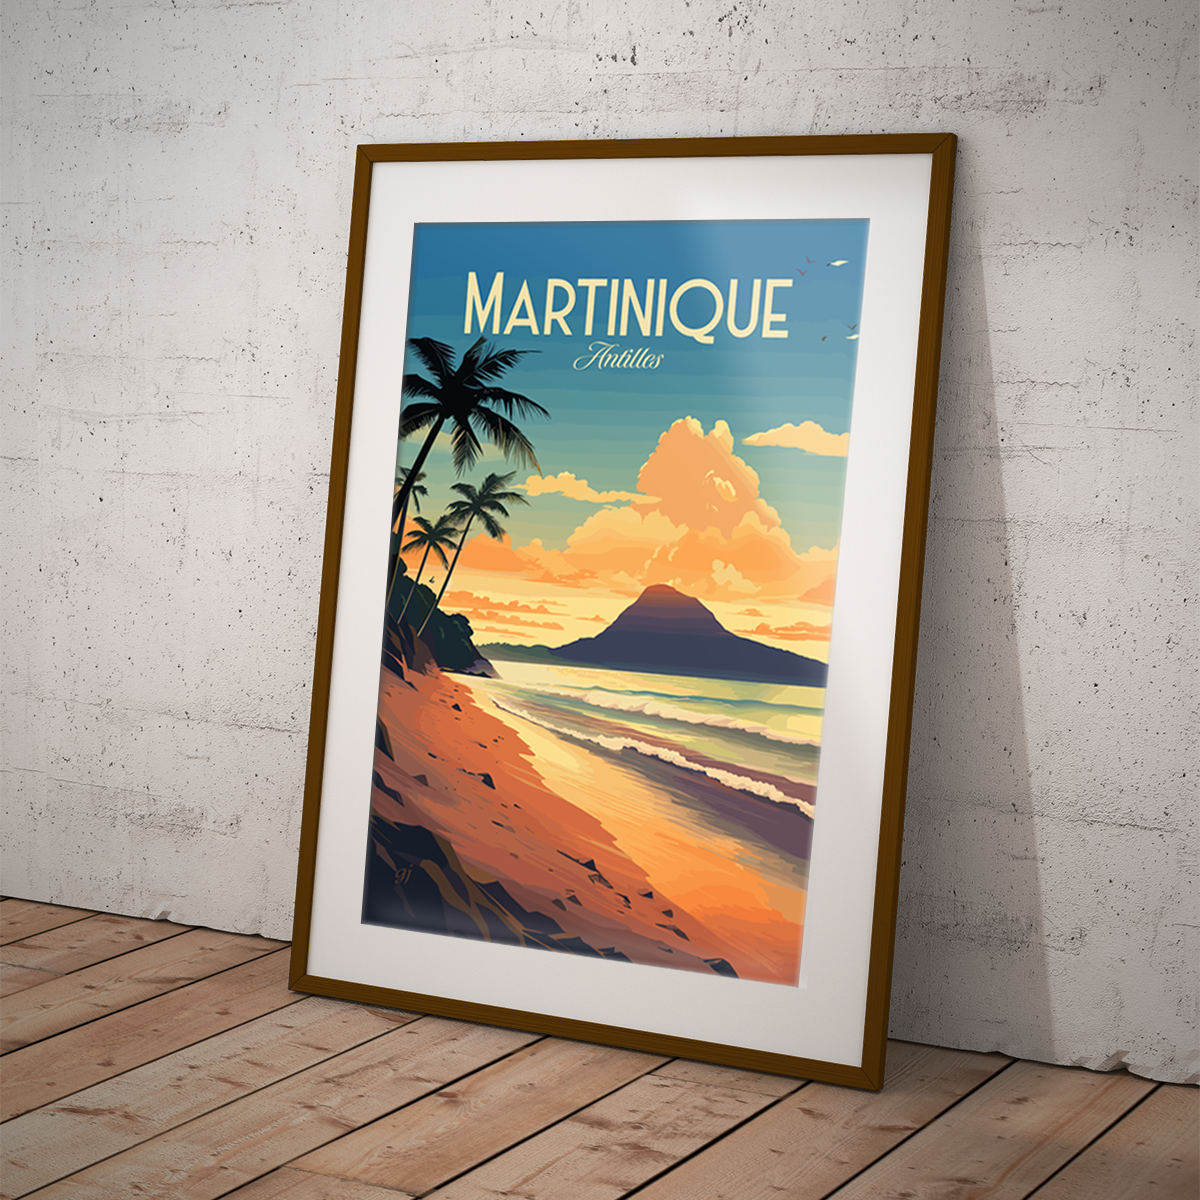 Martinique poster by bon voyage design